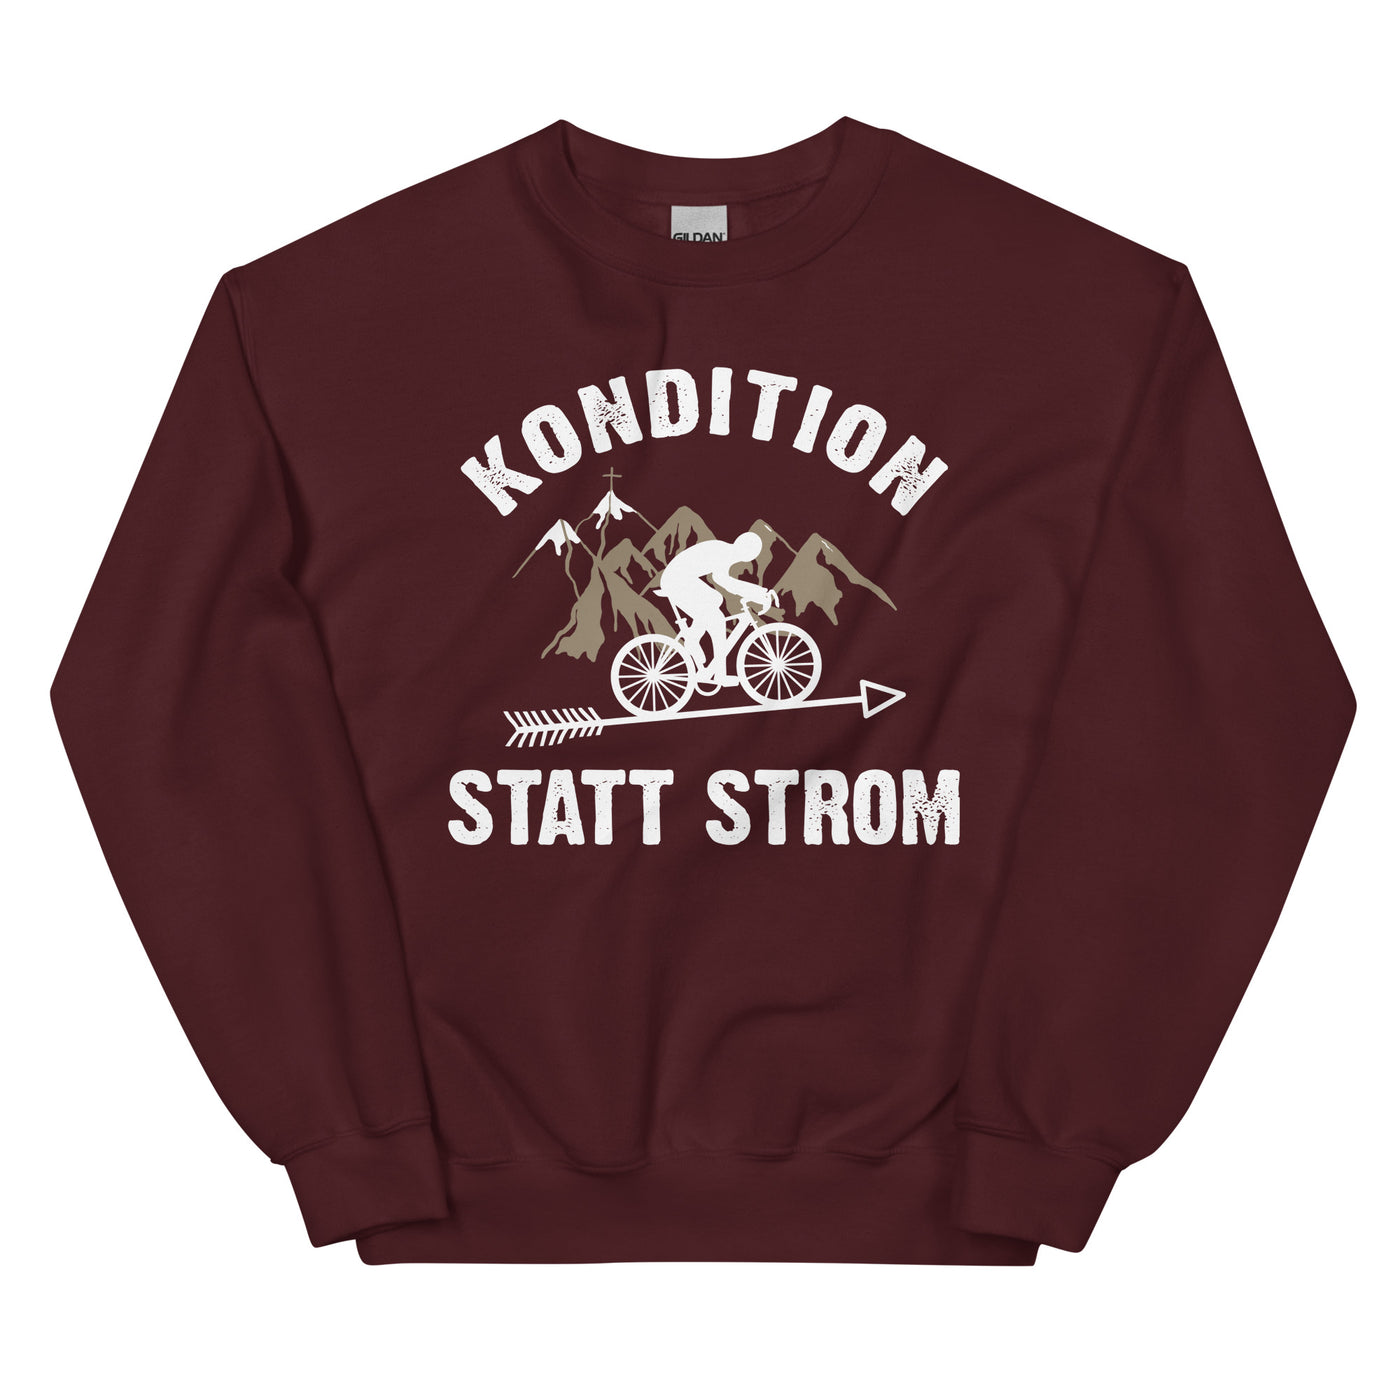 Kondition Statt Strom - Sweatshirt (Unisex) fahrrad mountainbike Maroon